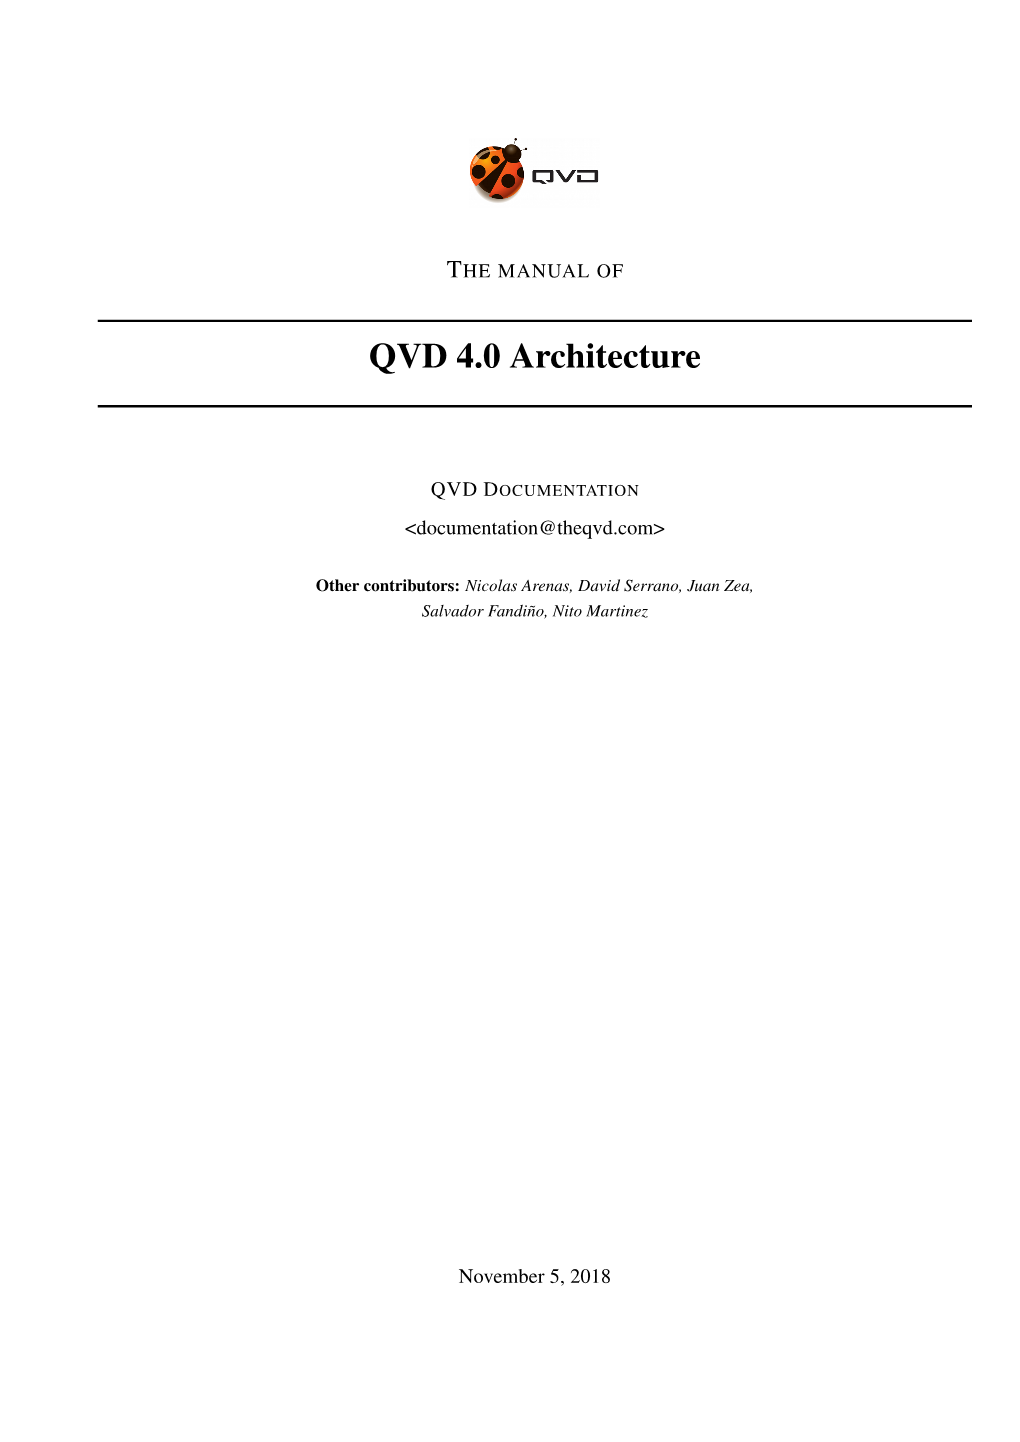 QVD 4.0 Architecture Manual I